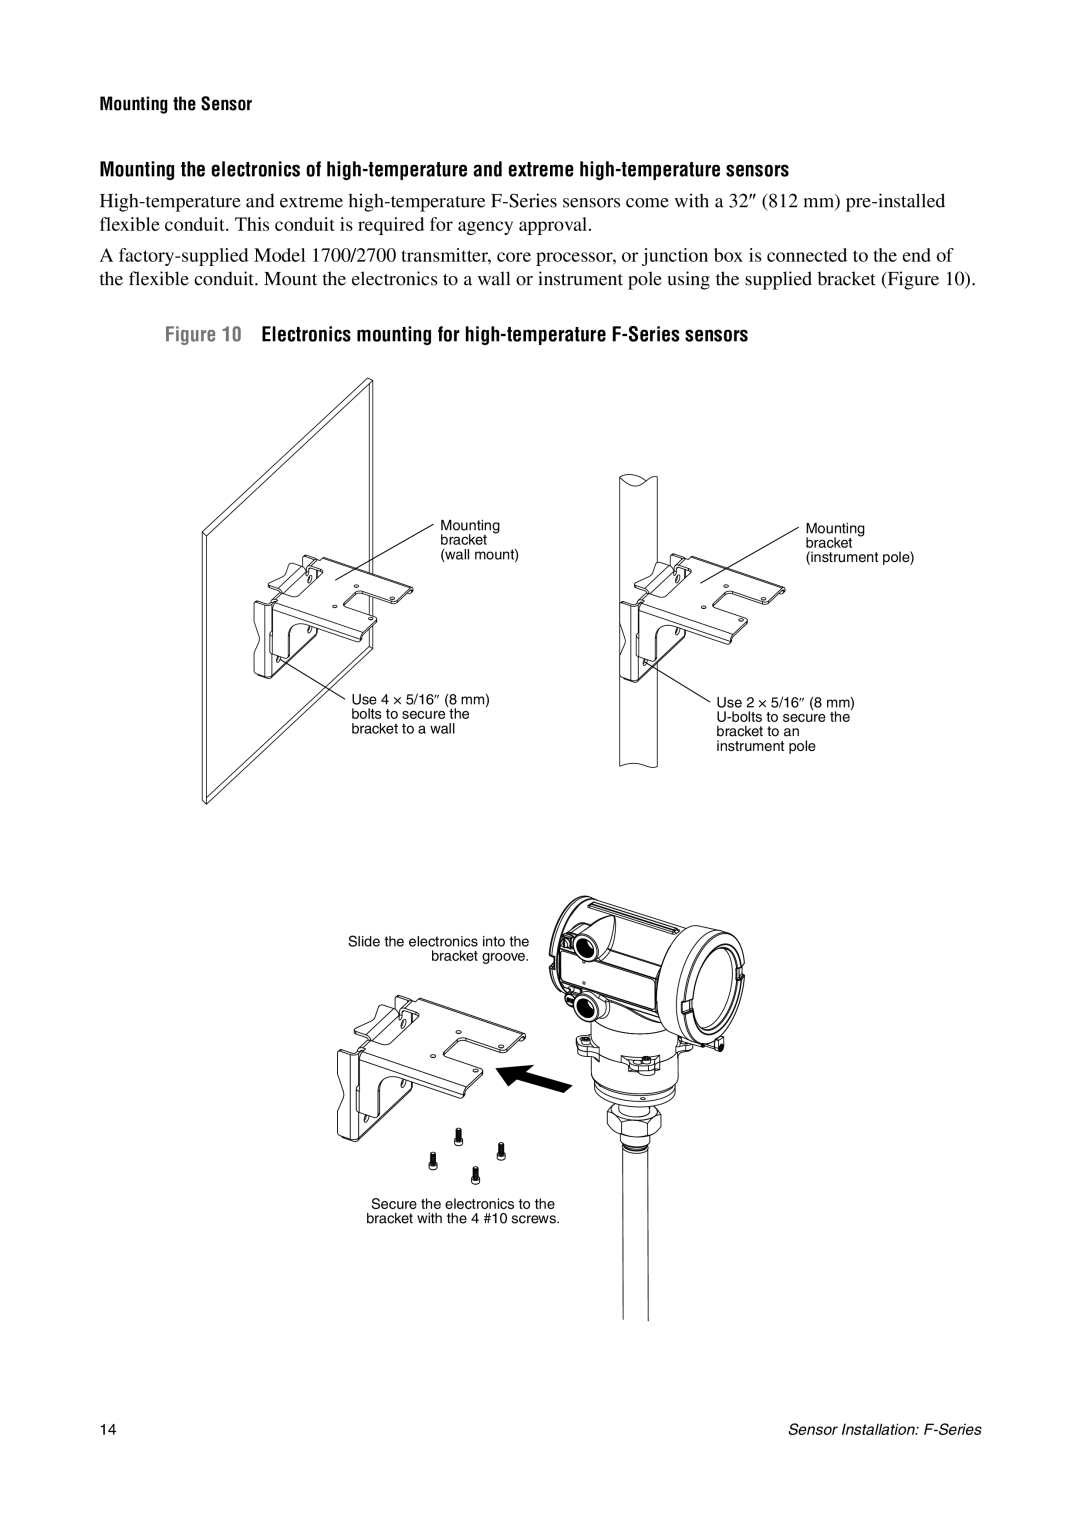 Emerson F-SERIES SENSOR installation manual Mounting bracket wall mount, Mounting bracket instrument pole 